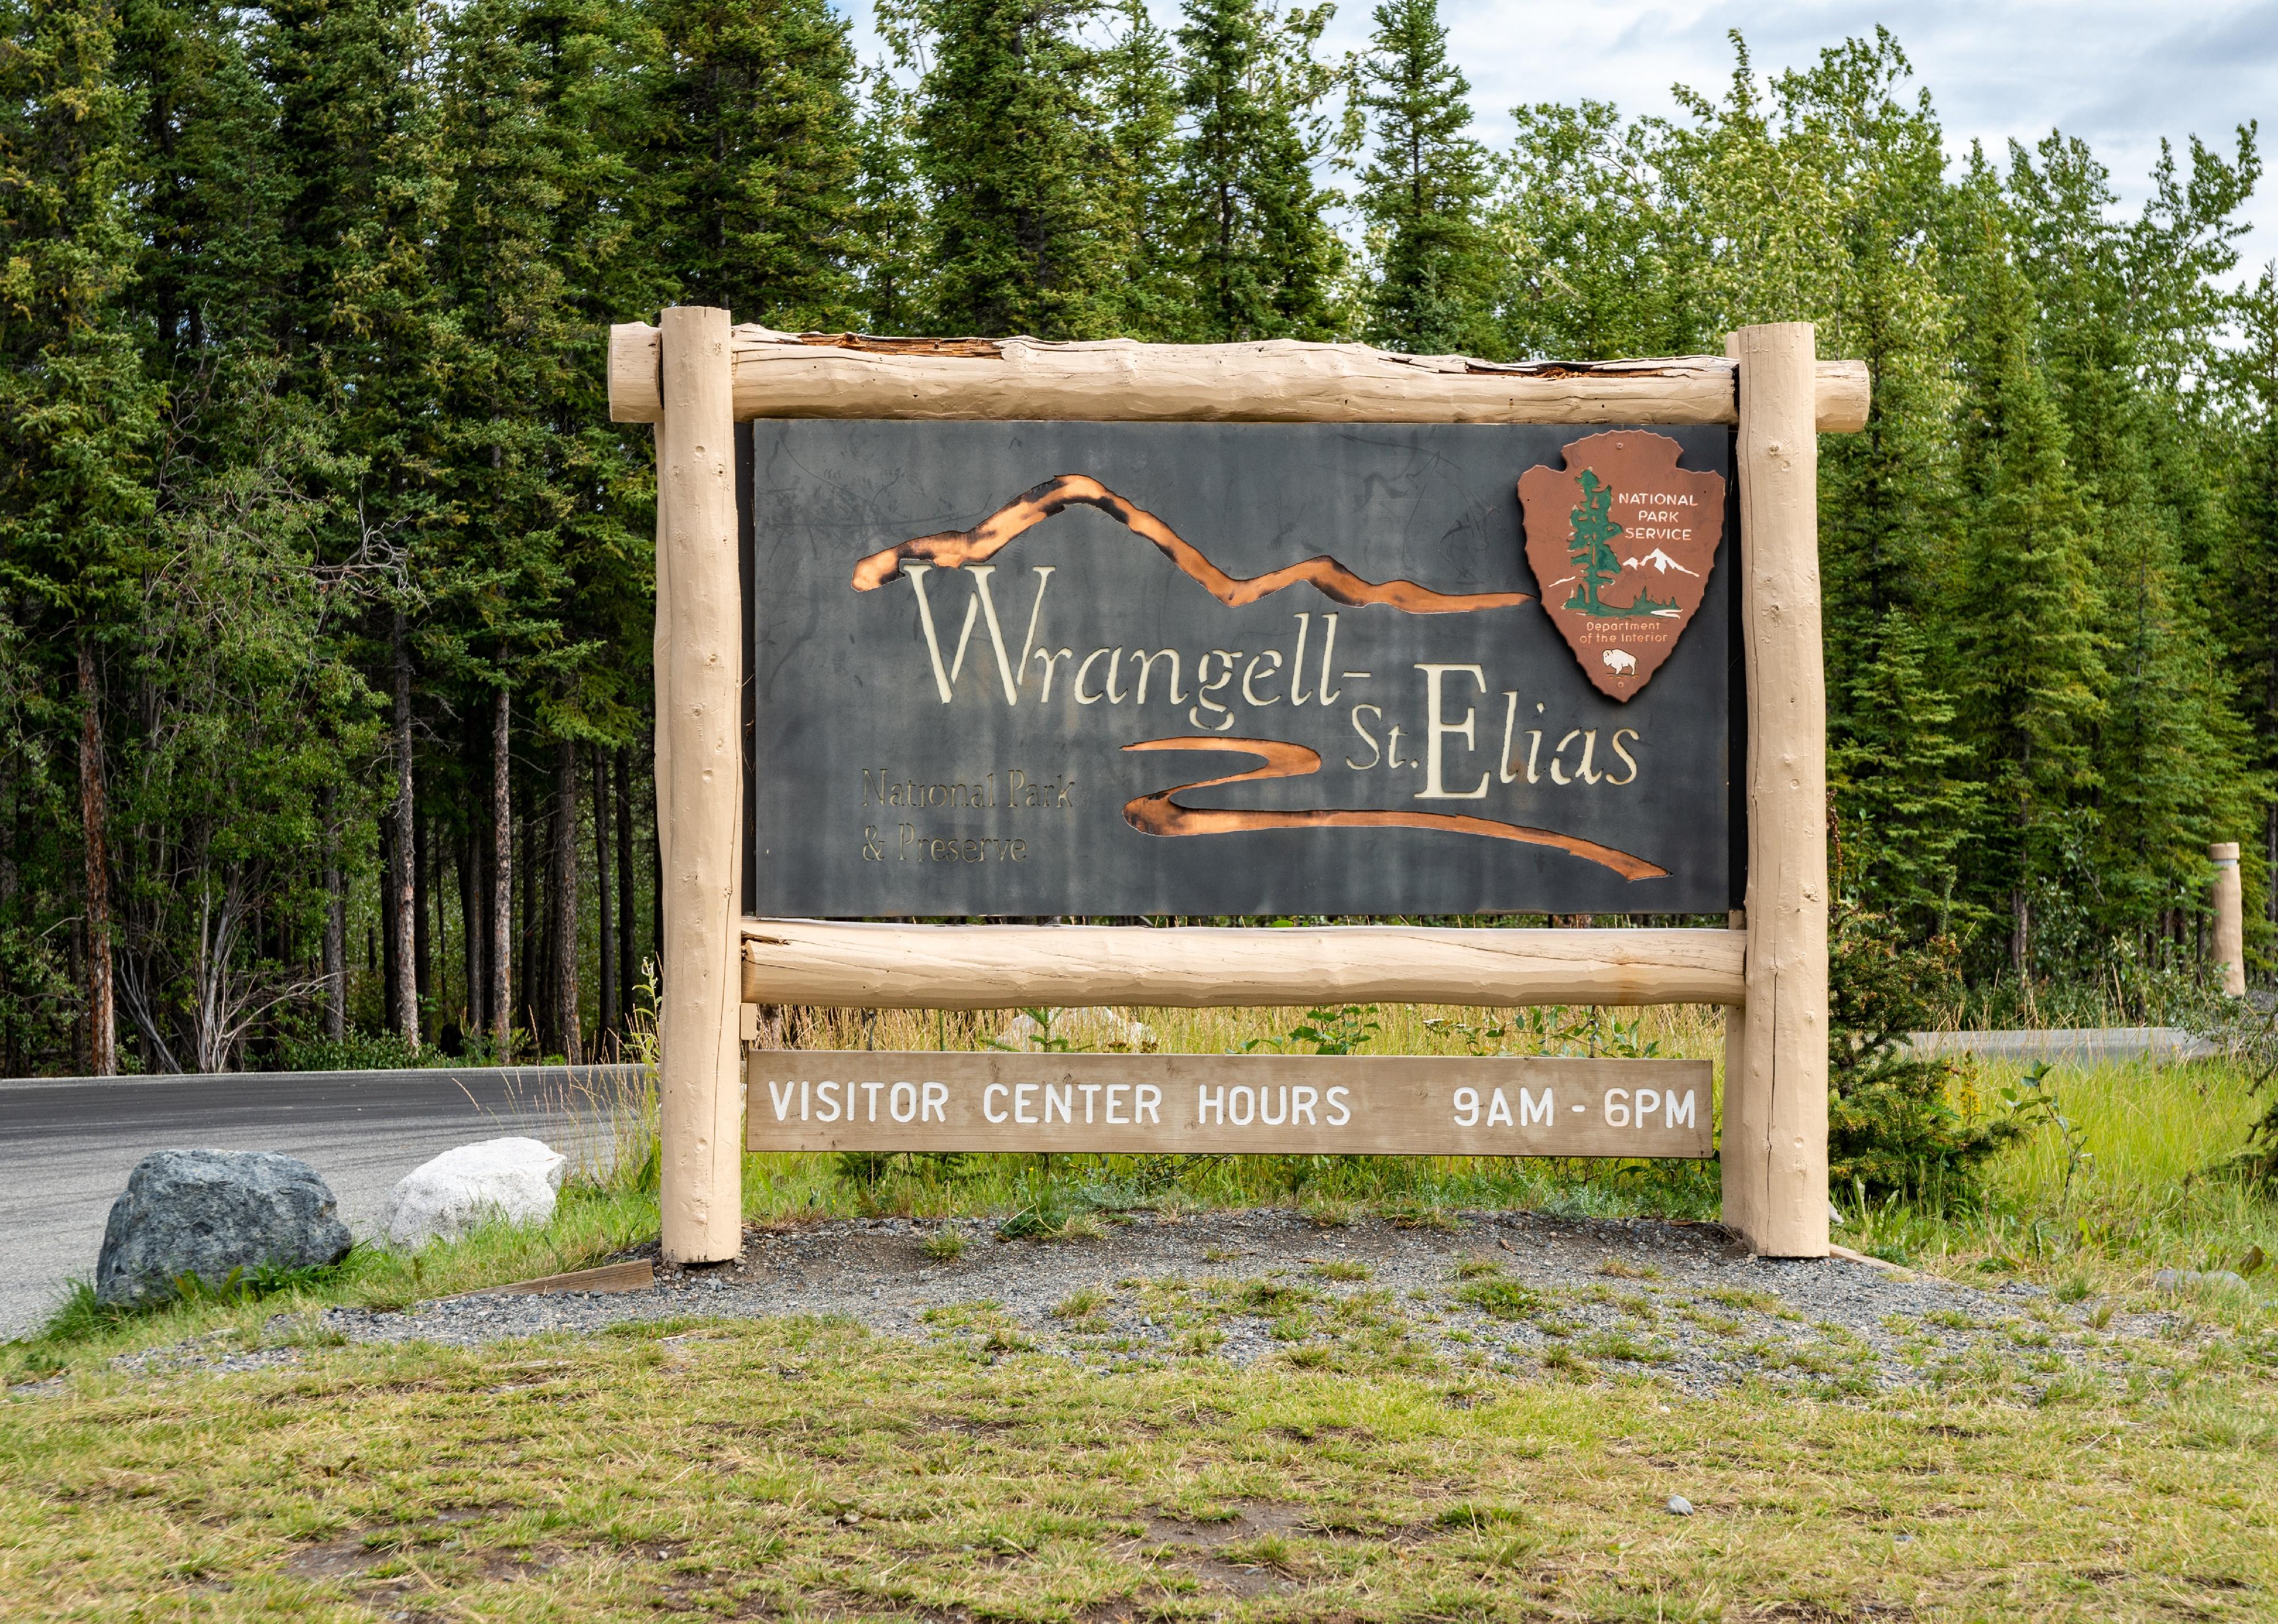 Sign for Wrangell-St. Elias National Park in Alaska.